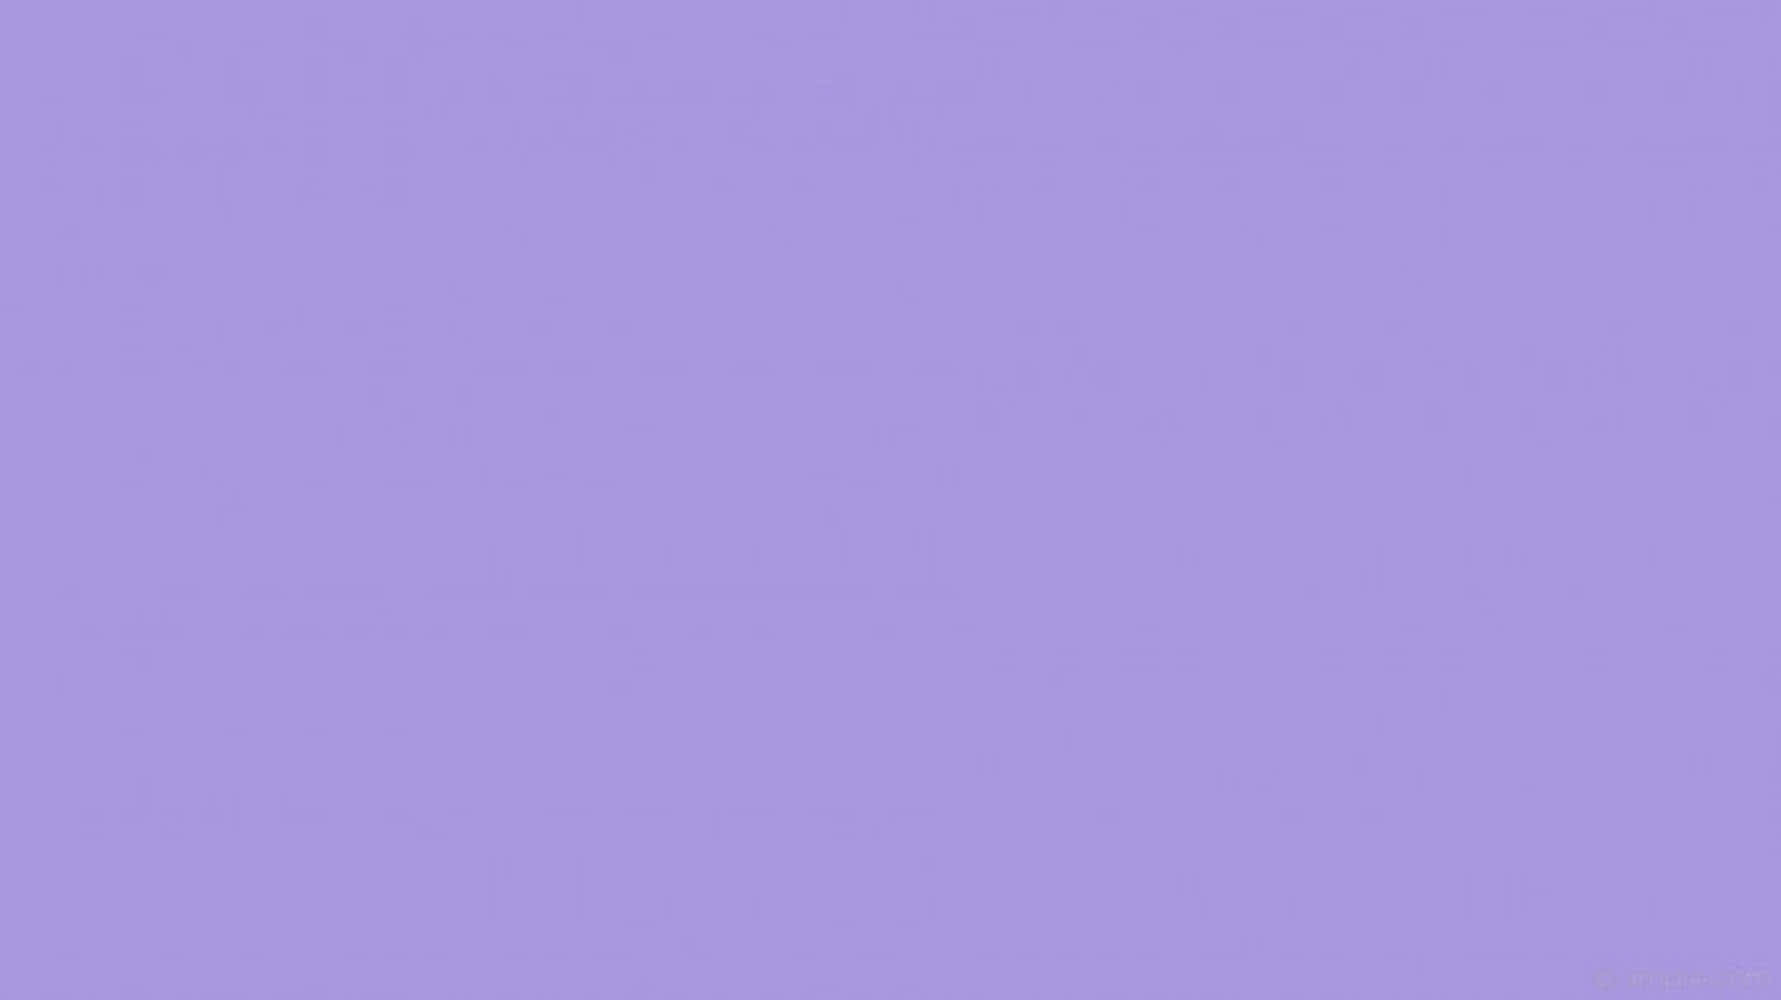 Plush solid purple background